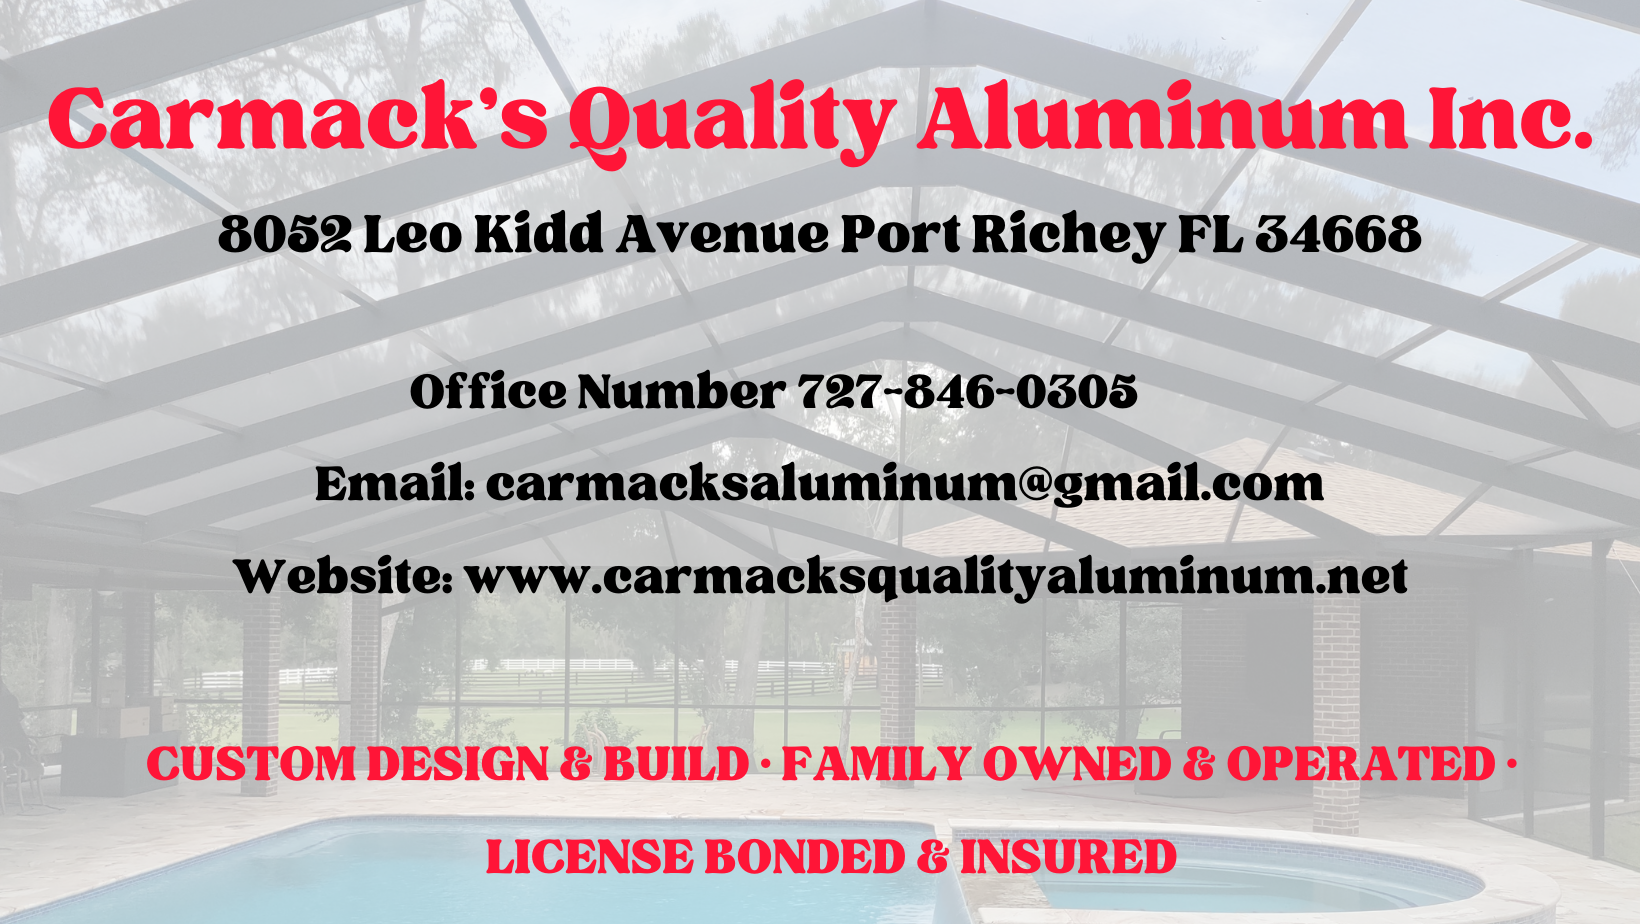 Carmack's Quality Aluminum Inc